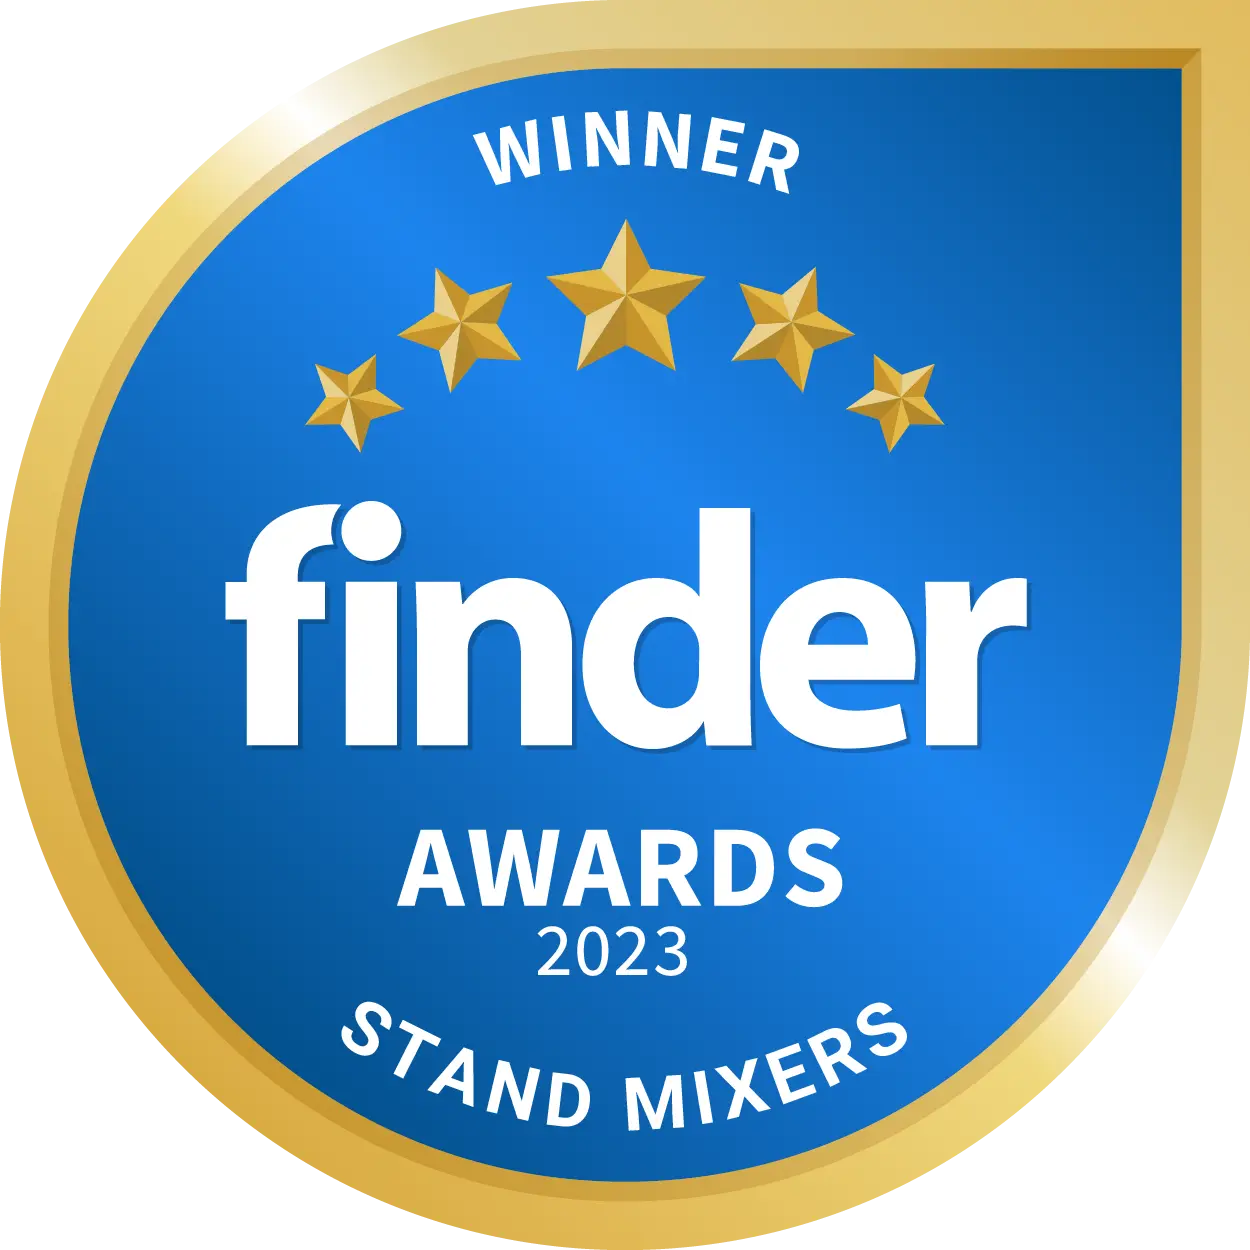 Best Stand Mixer Brand